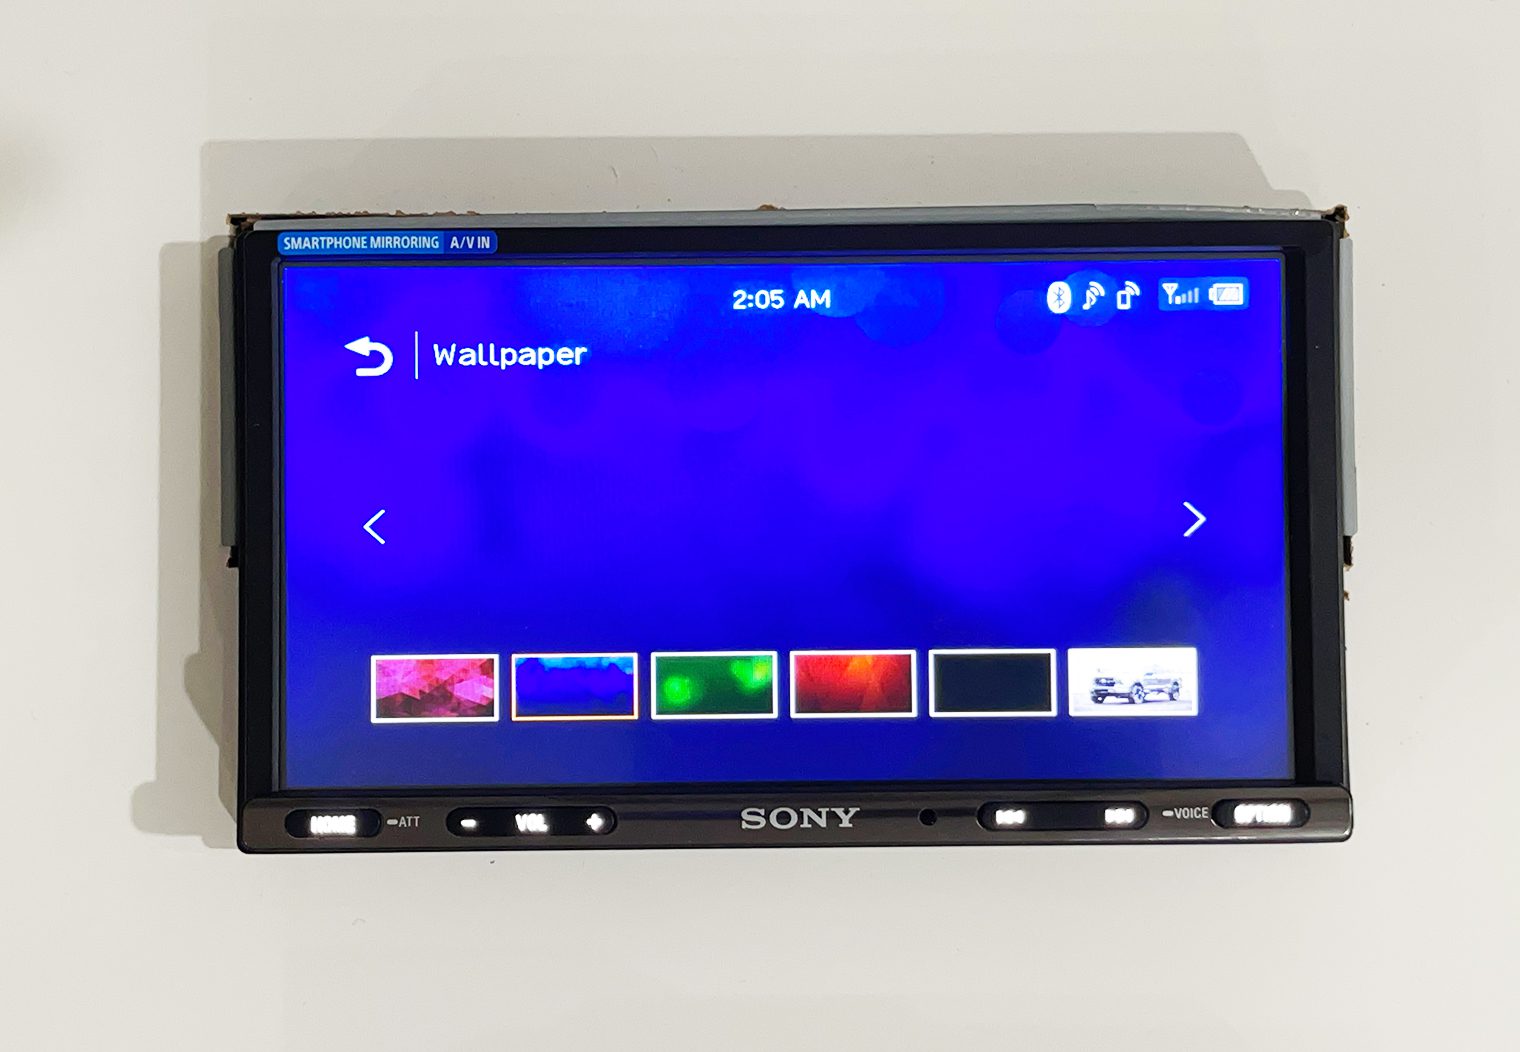 Sony XAV-AX3200 wallpaper select